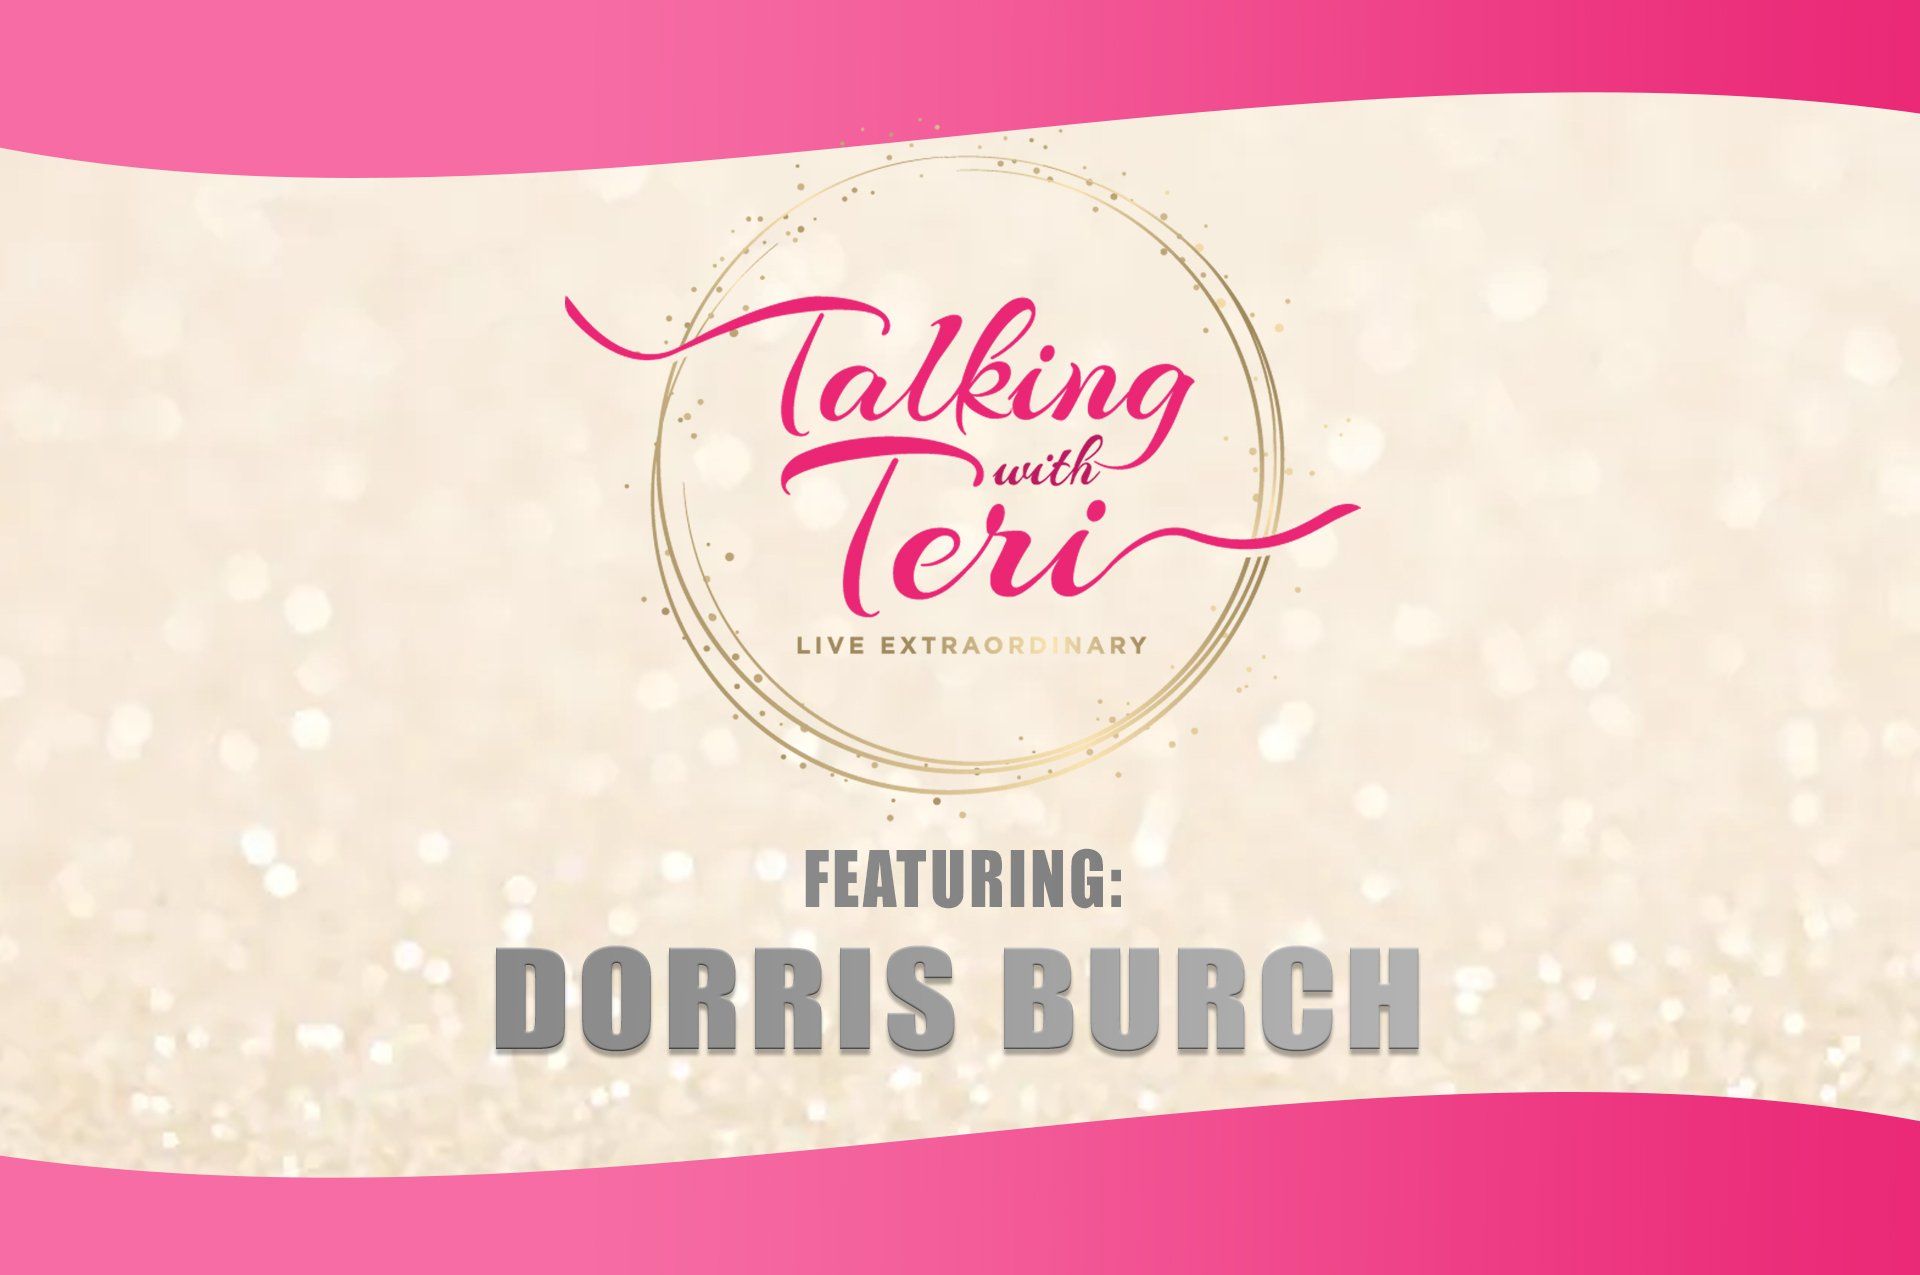 Talking With Teri and Dorris Burch